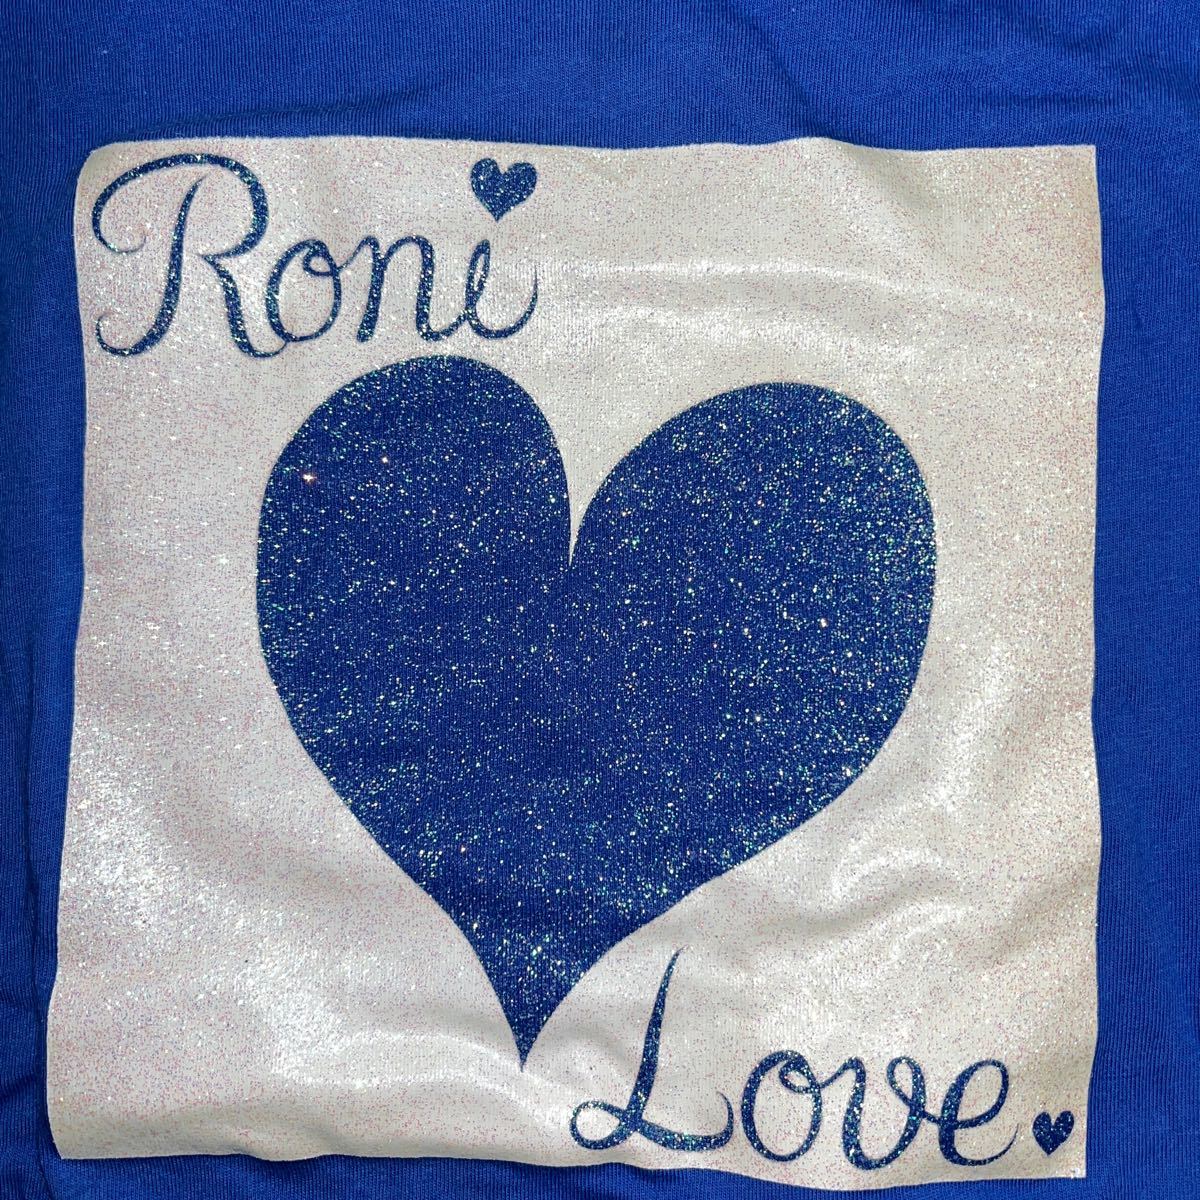 [RONI|roni.] футболка мини-юбка chu-ru юбка размер L 150.155cm б/у верх и низ 2 шт. комплект синий 